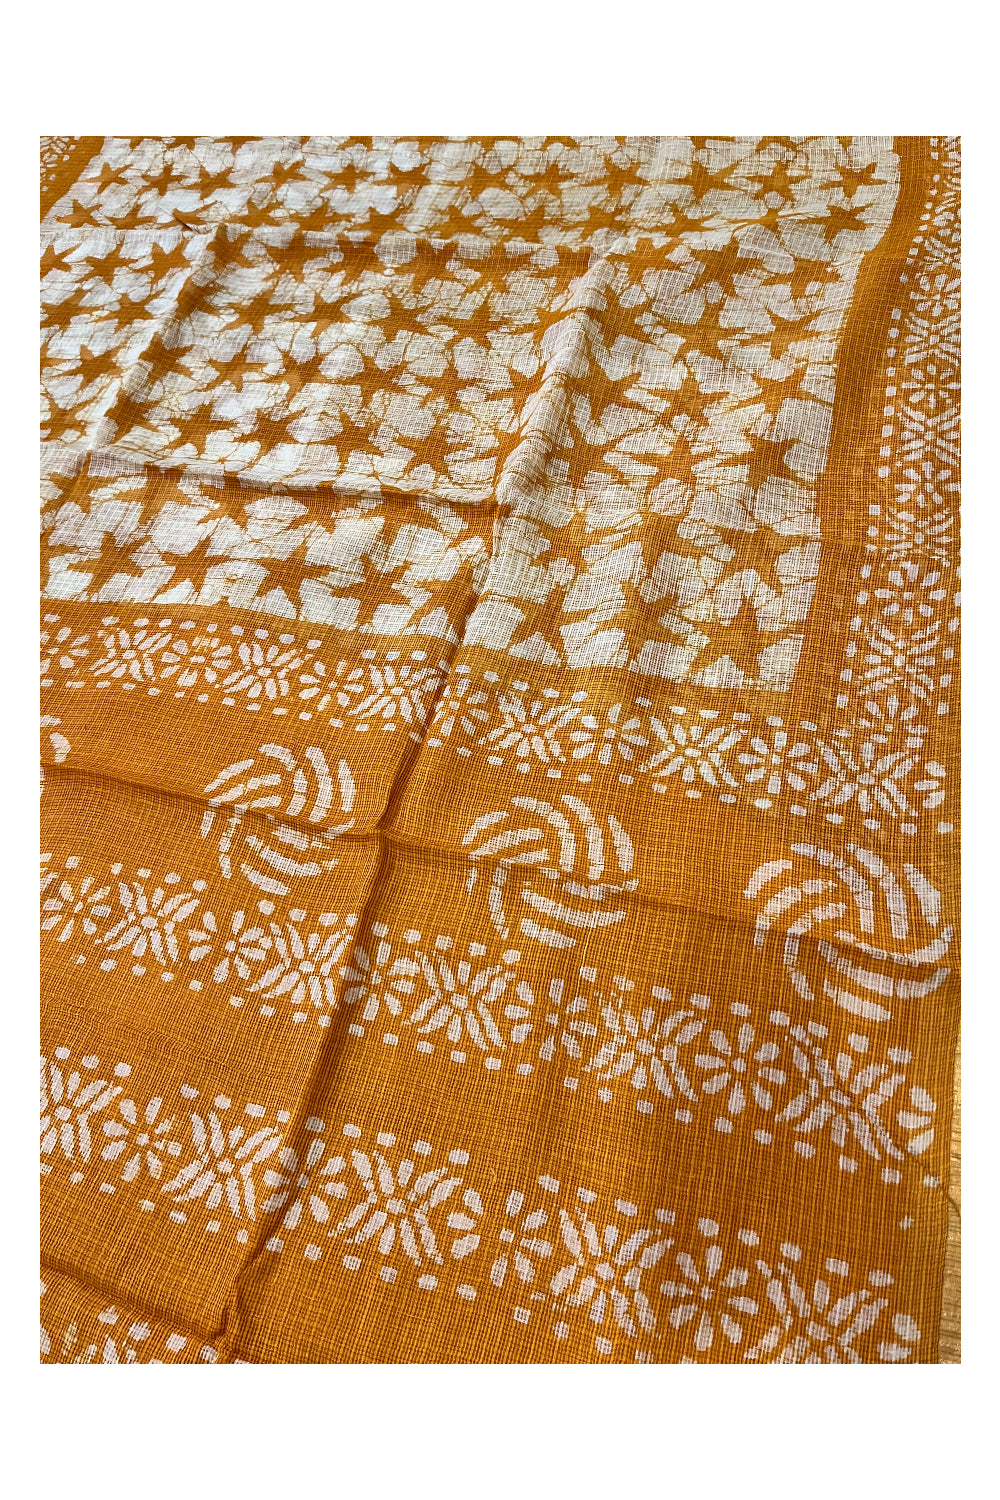 Southloom Kota Fabric Printed Yellow Saree